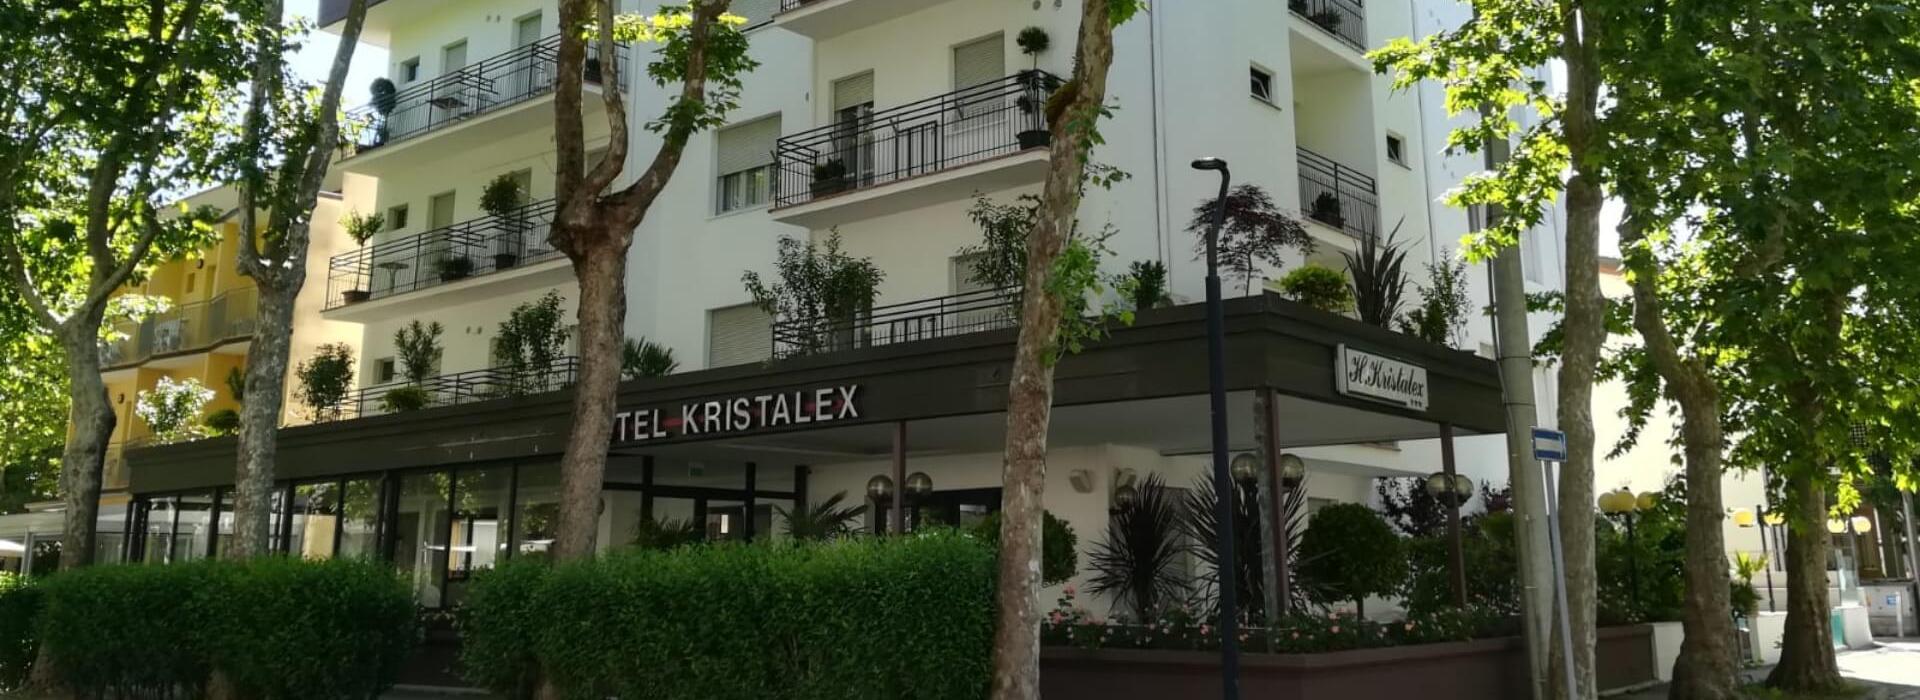 hotelkristalex en best-offer-june-with-unbeatable-discount-in-pet-friendly-hotel-in-cesenatico 017